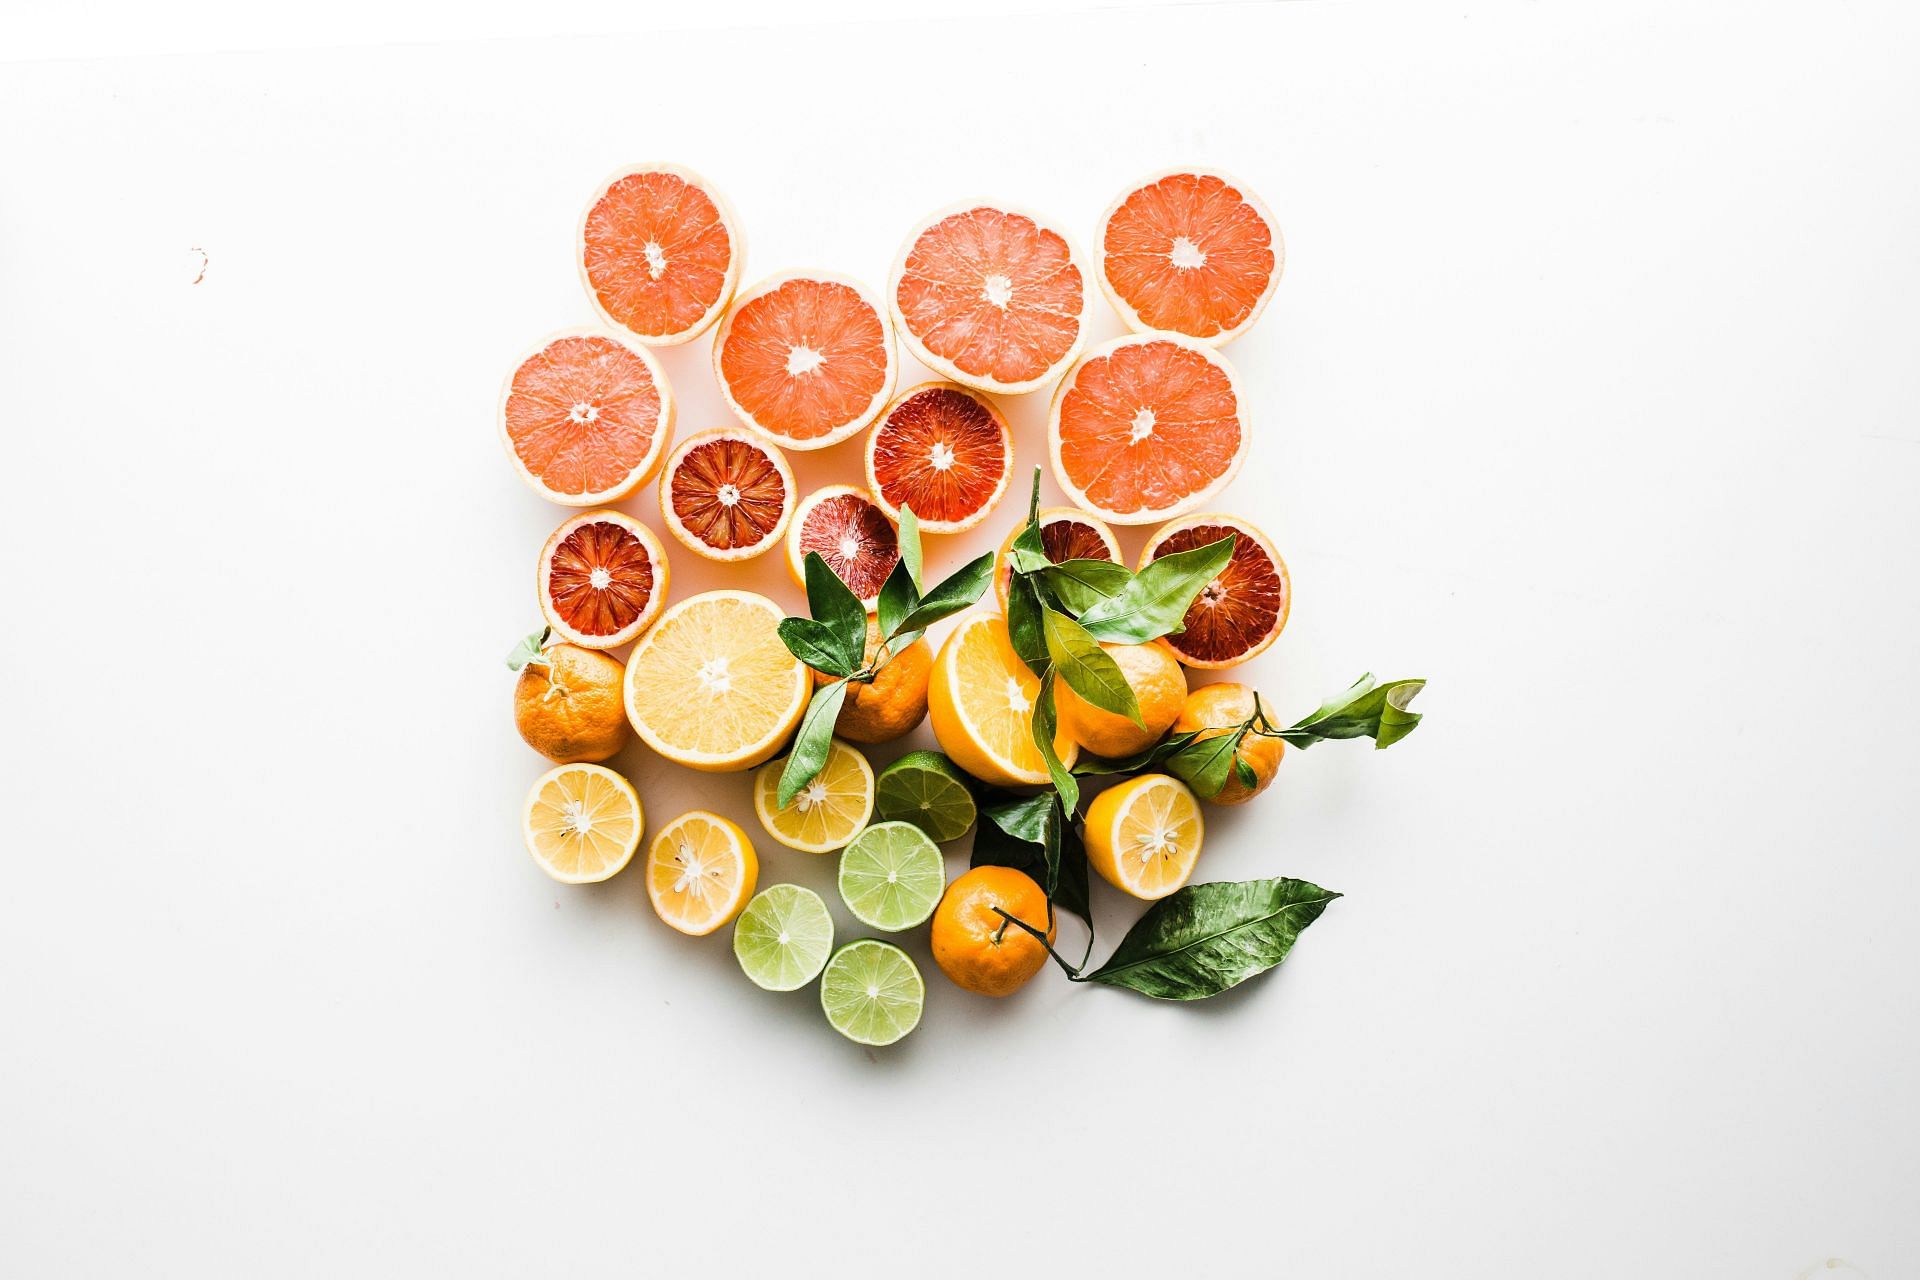 Citrus fruits come under collagen-rich foods (Image by Brooke Lark/Unsplash)